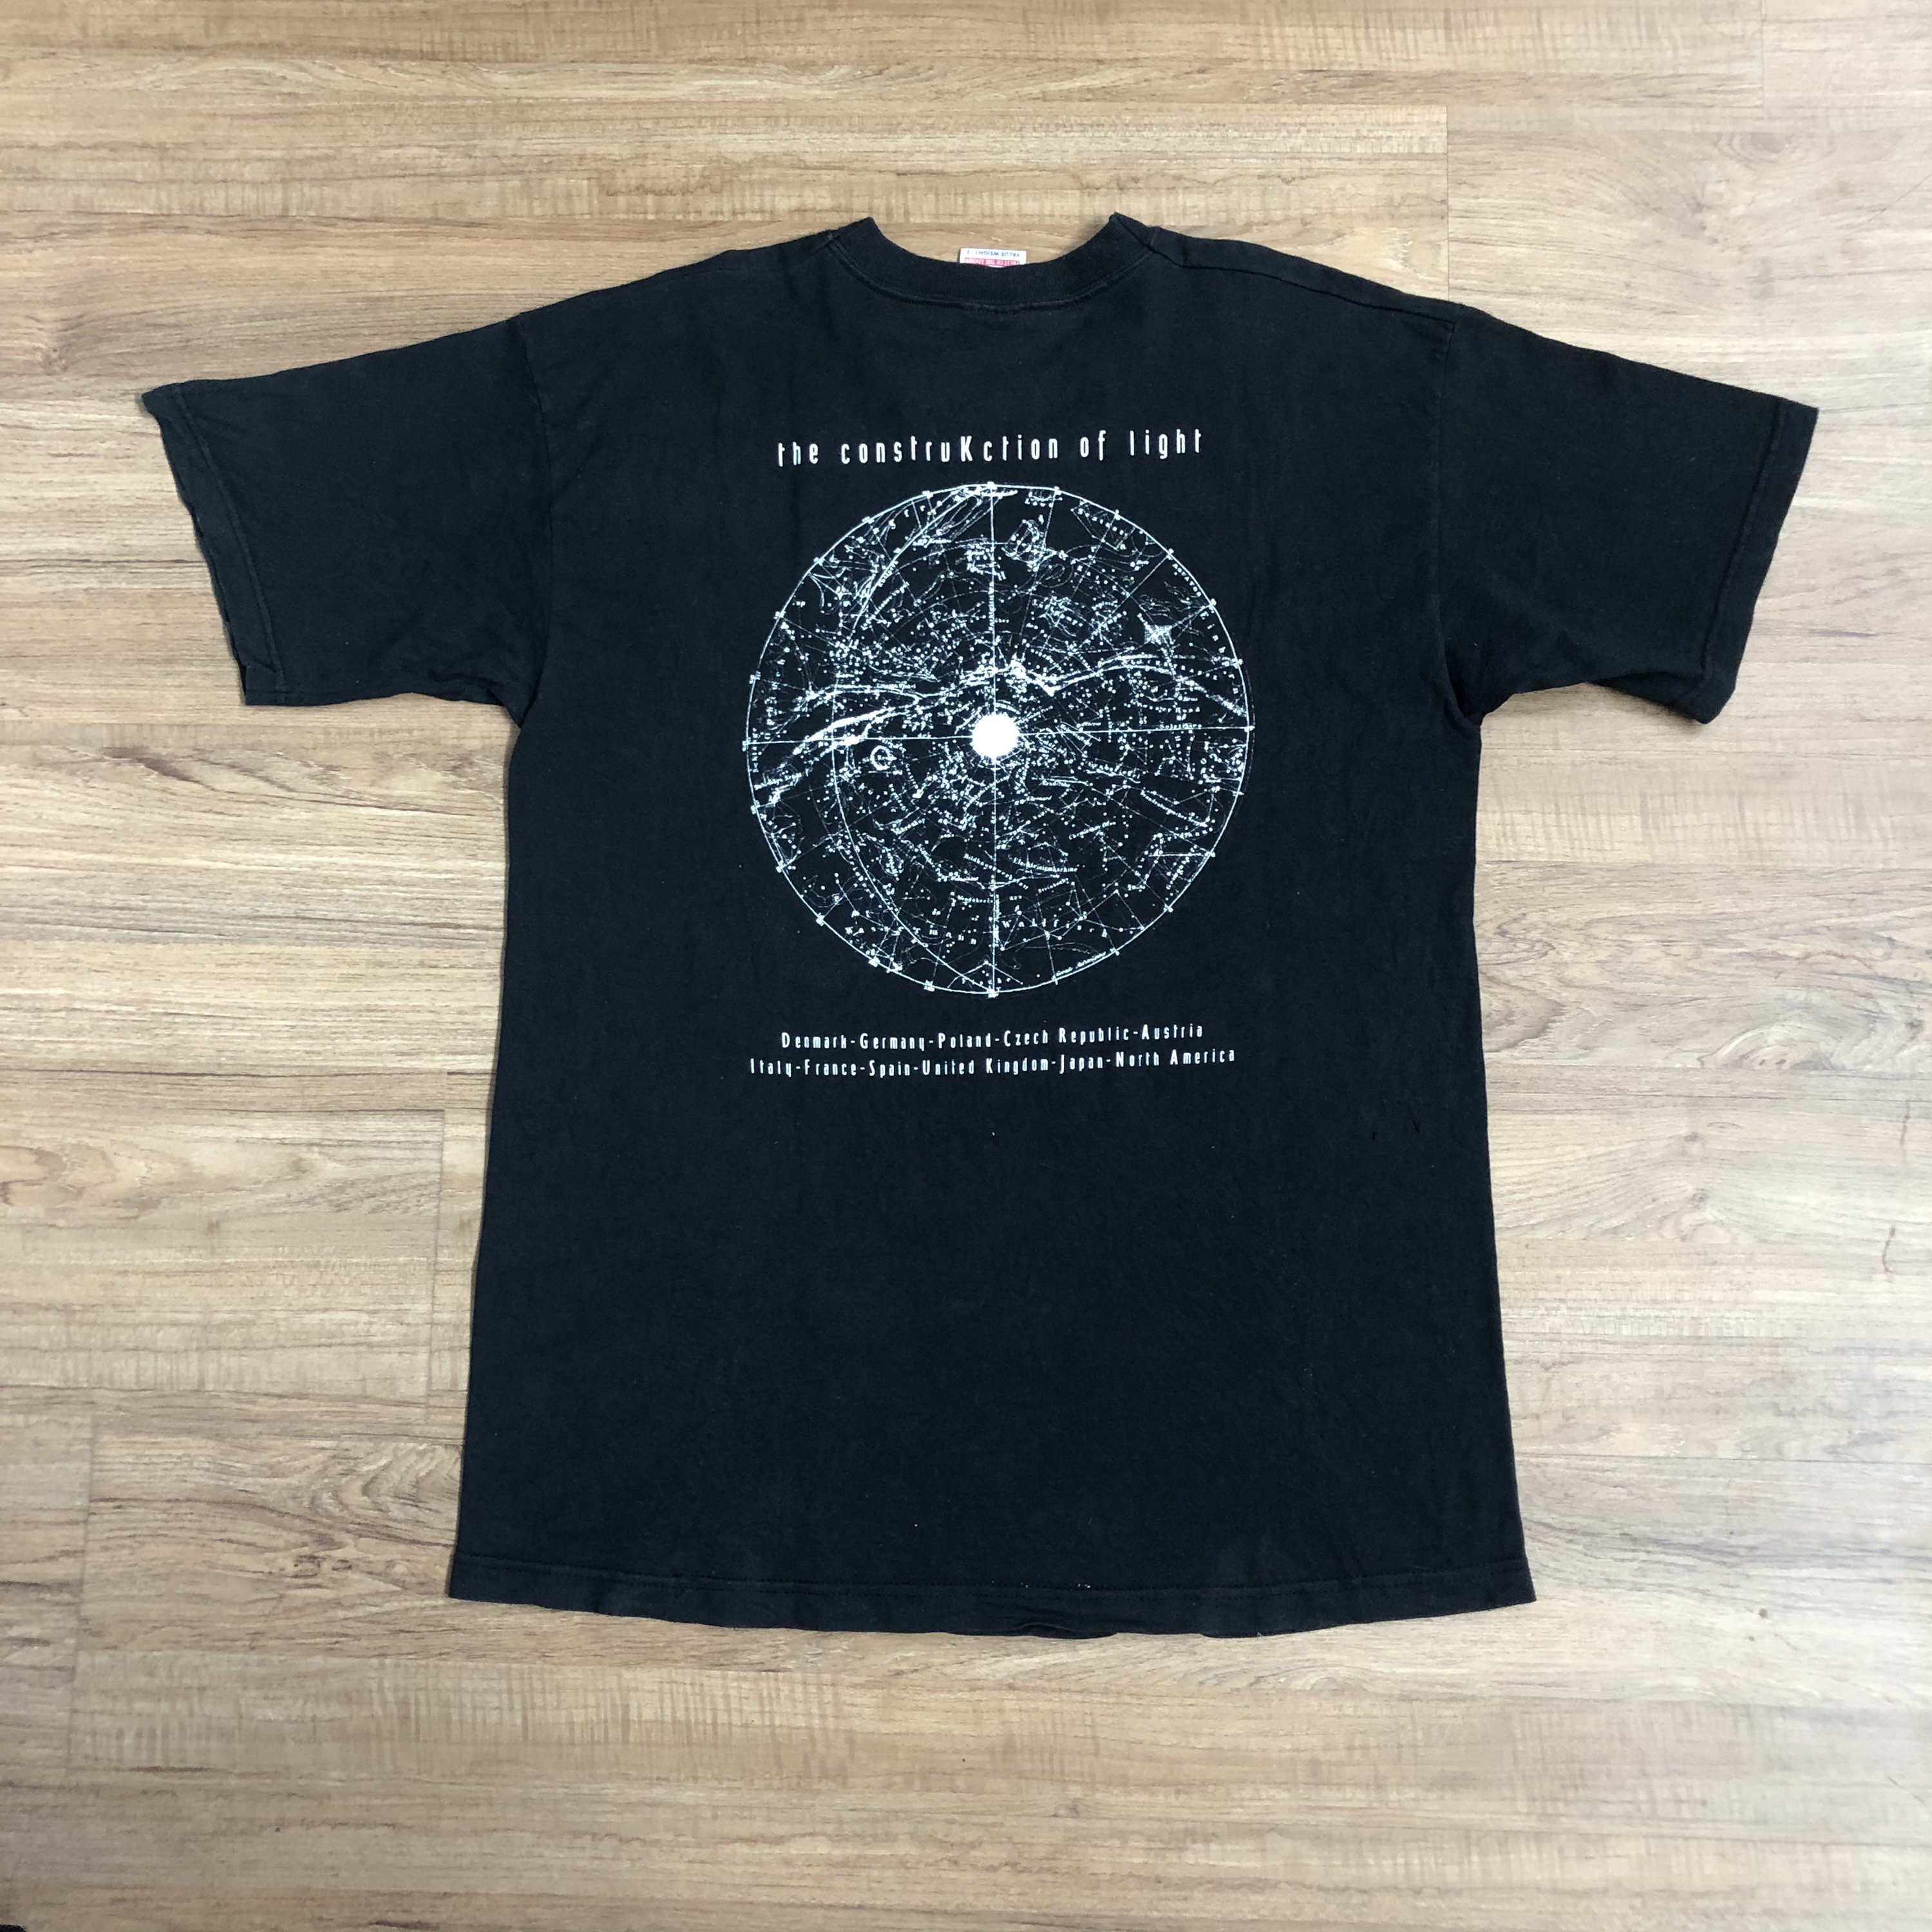 Vintage King Crimson Shirt / the Construkction of Light Tour